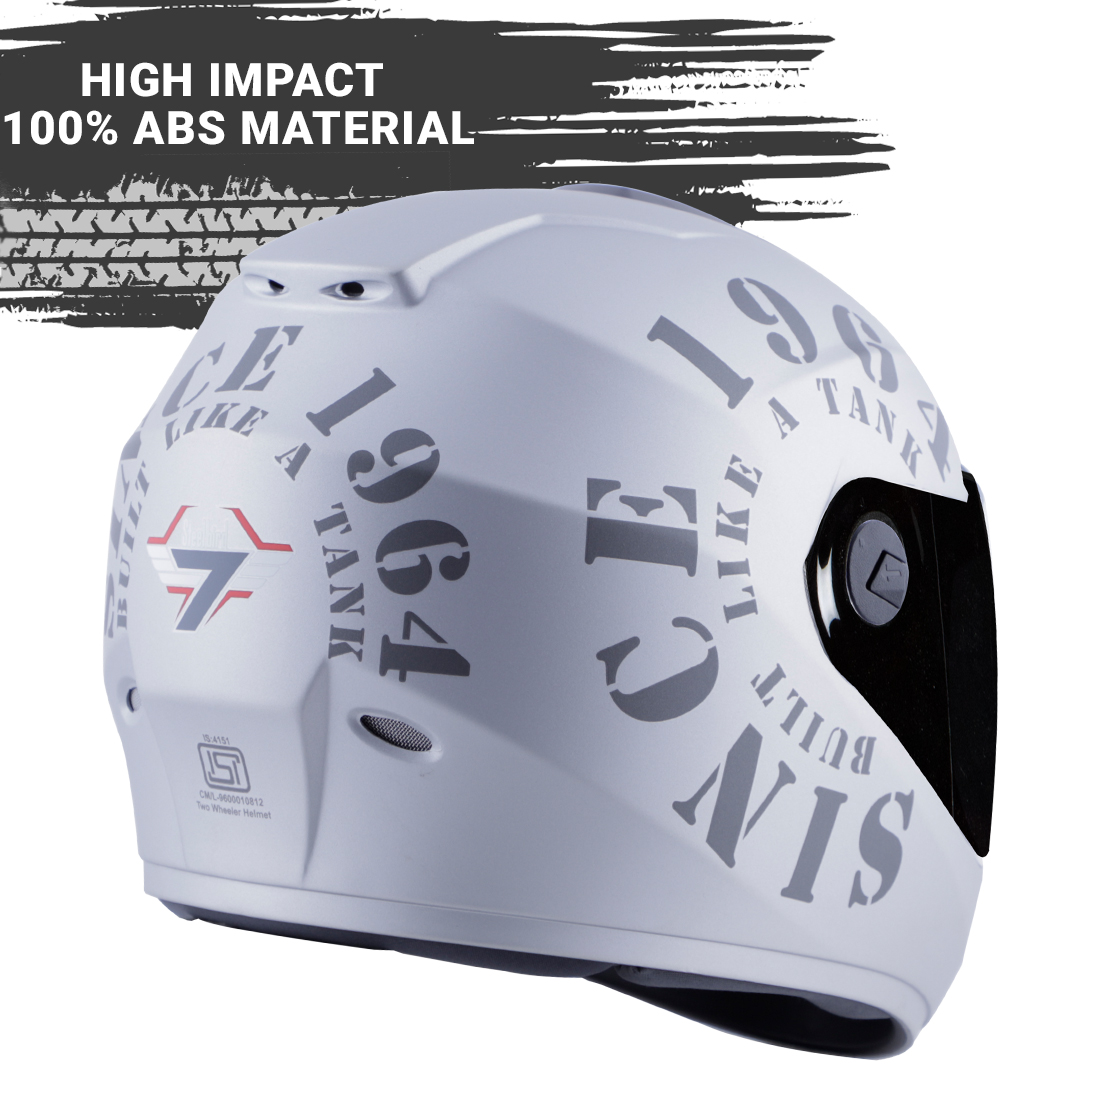 Steelbird SBH-11 Zoom Tank Full Face ISI Certified Helmet (Matt Silver Grey With Smoke Visor)